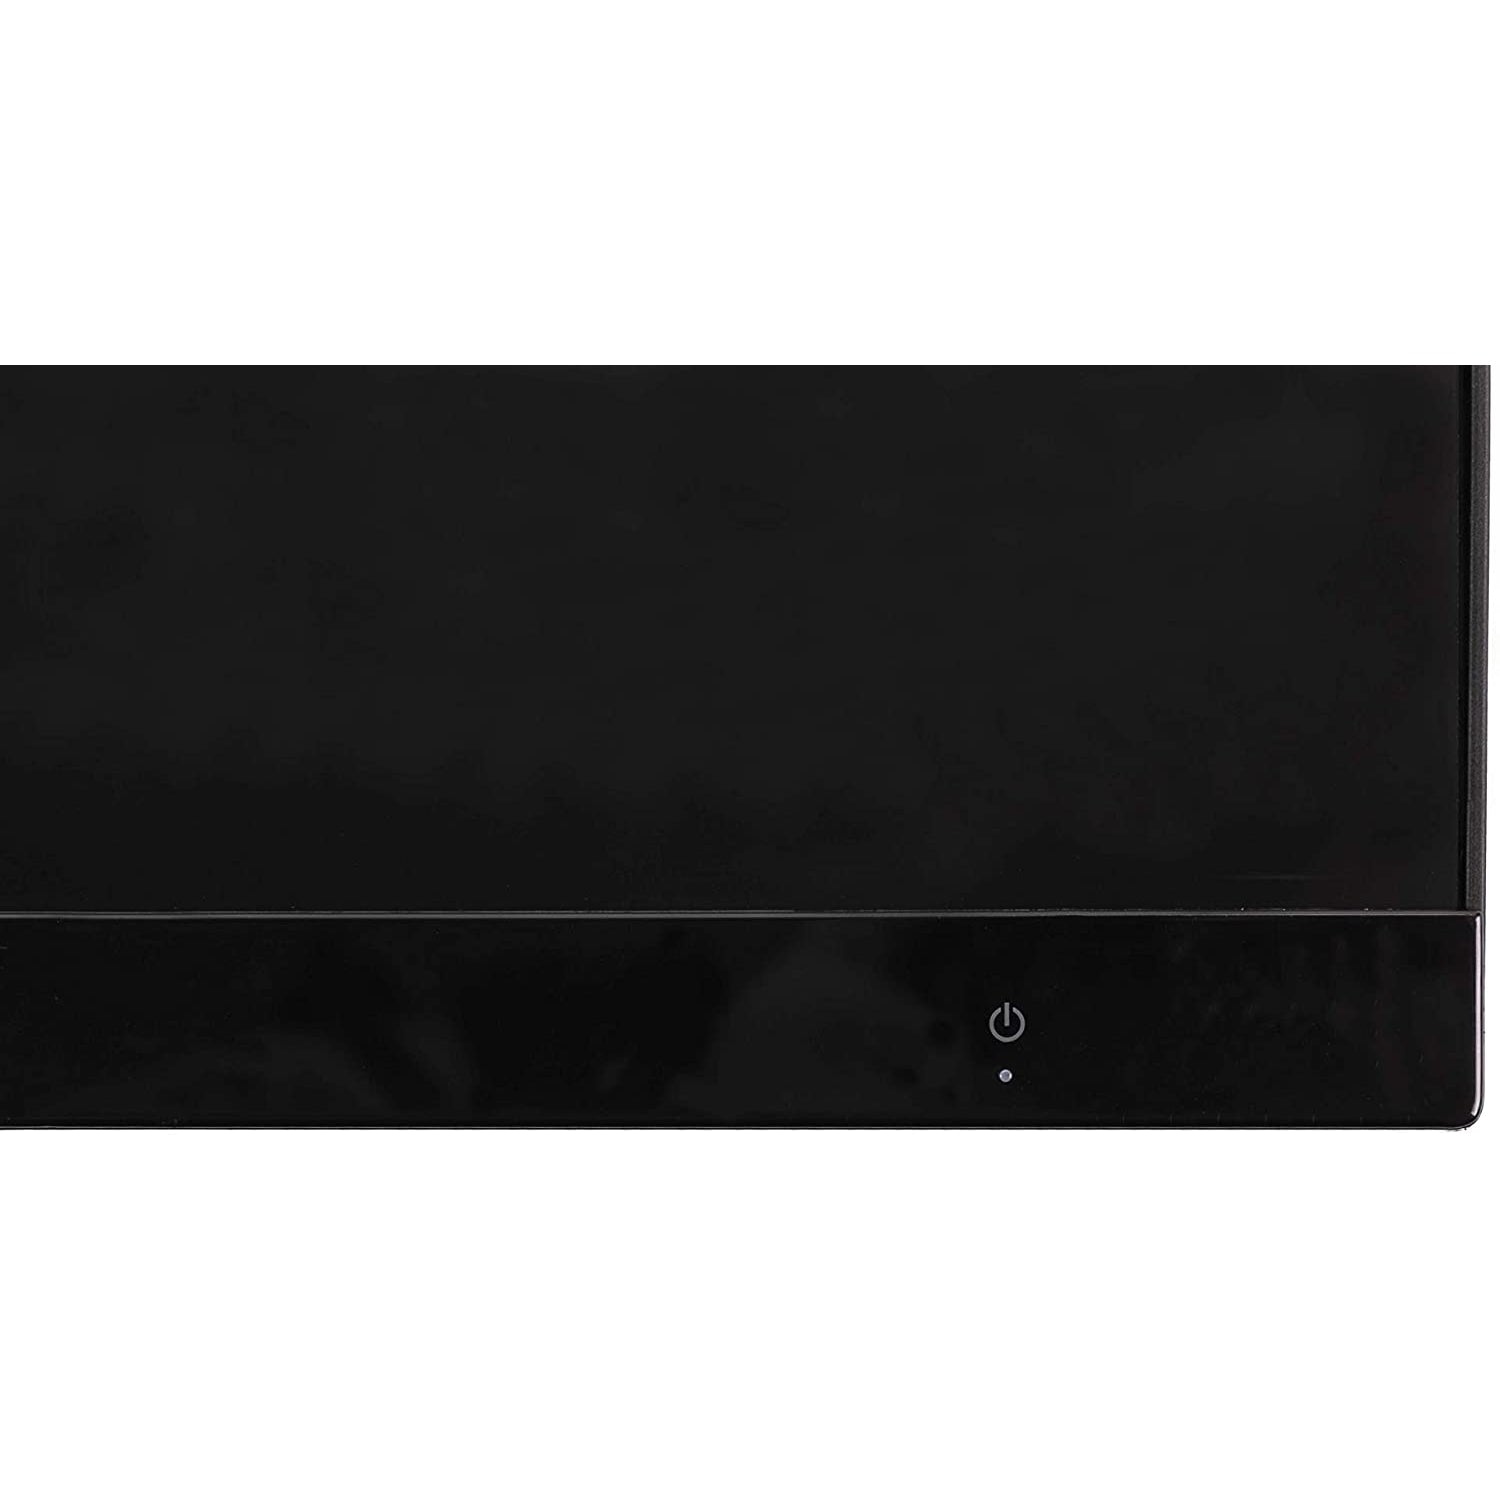 Philips E-Line 226E9Q 22" FHD LCD Monitor - Black